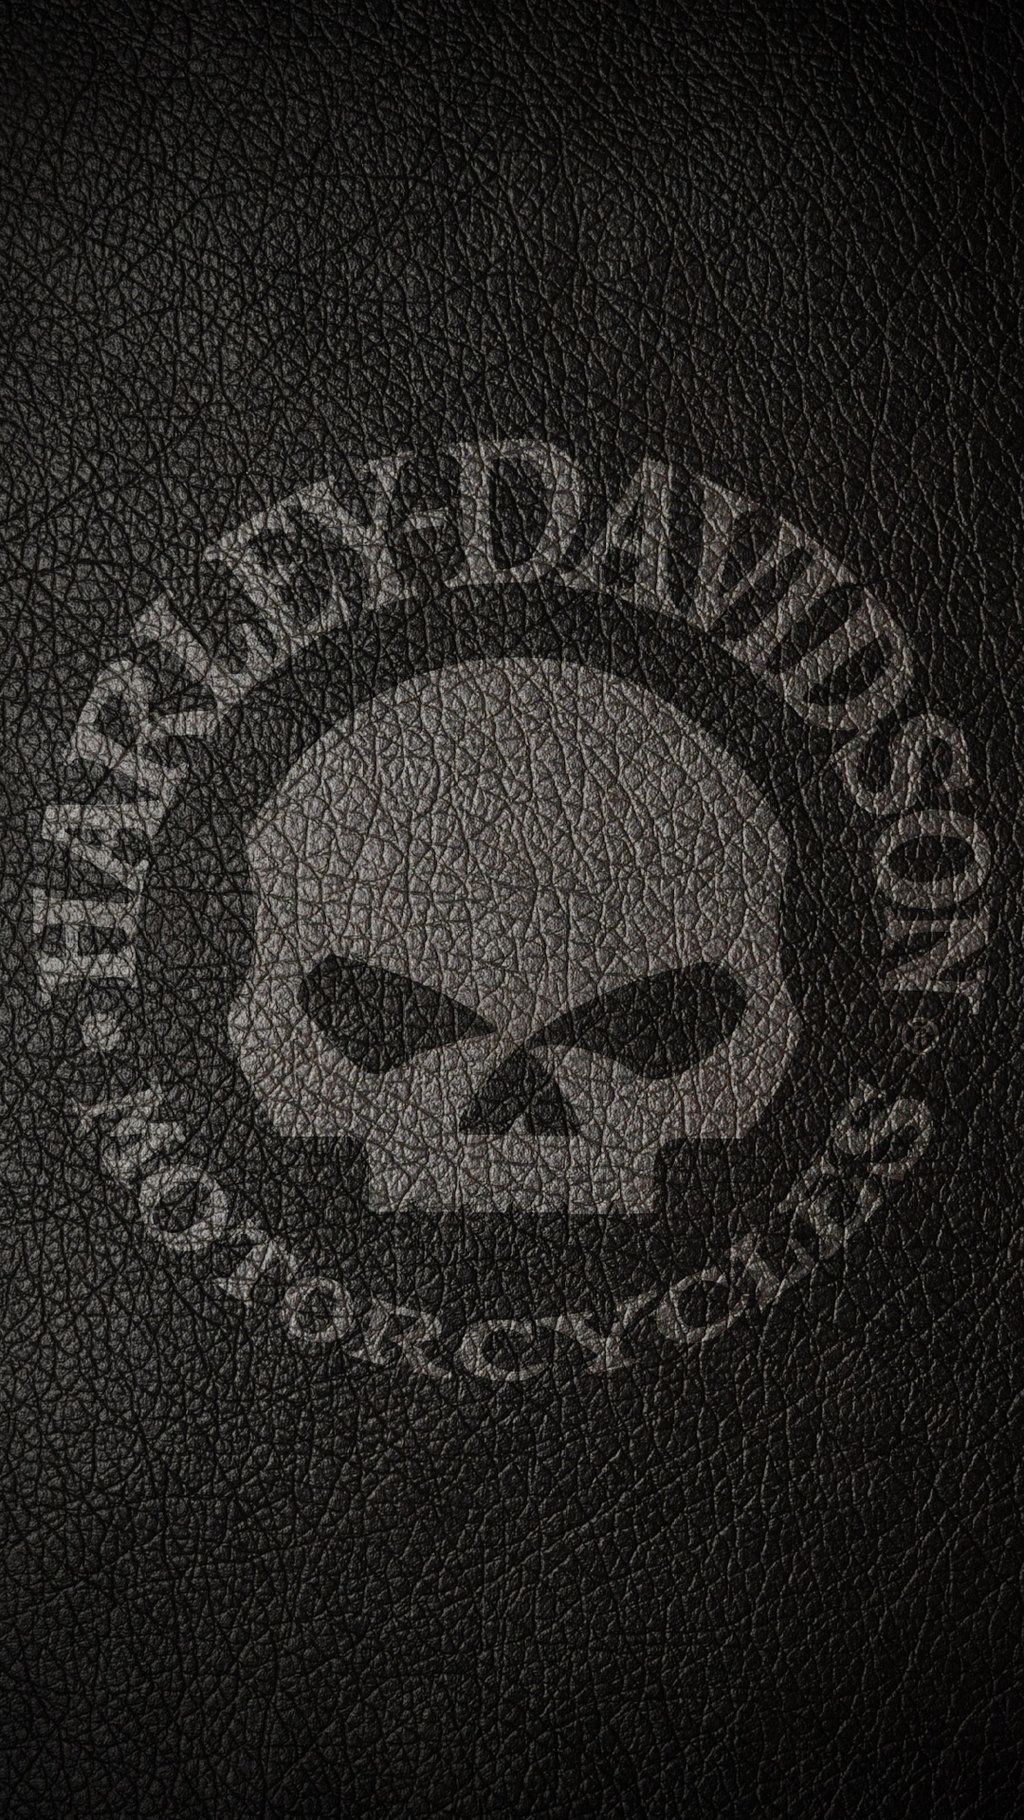 Harley Davidson. Harley davidson